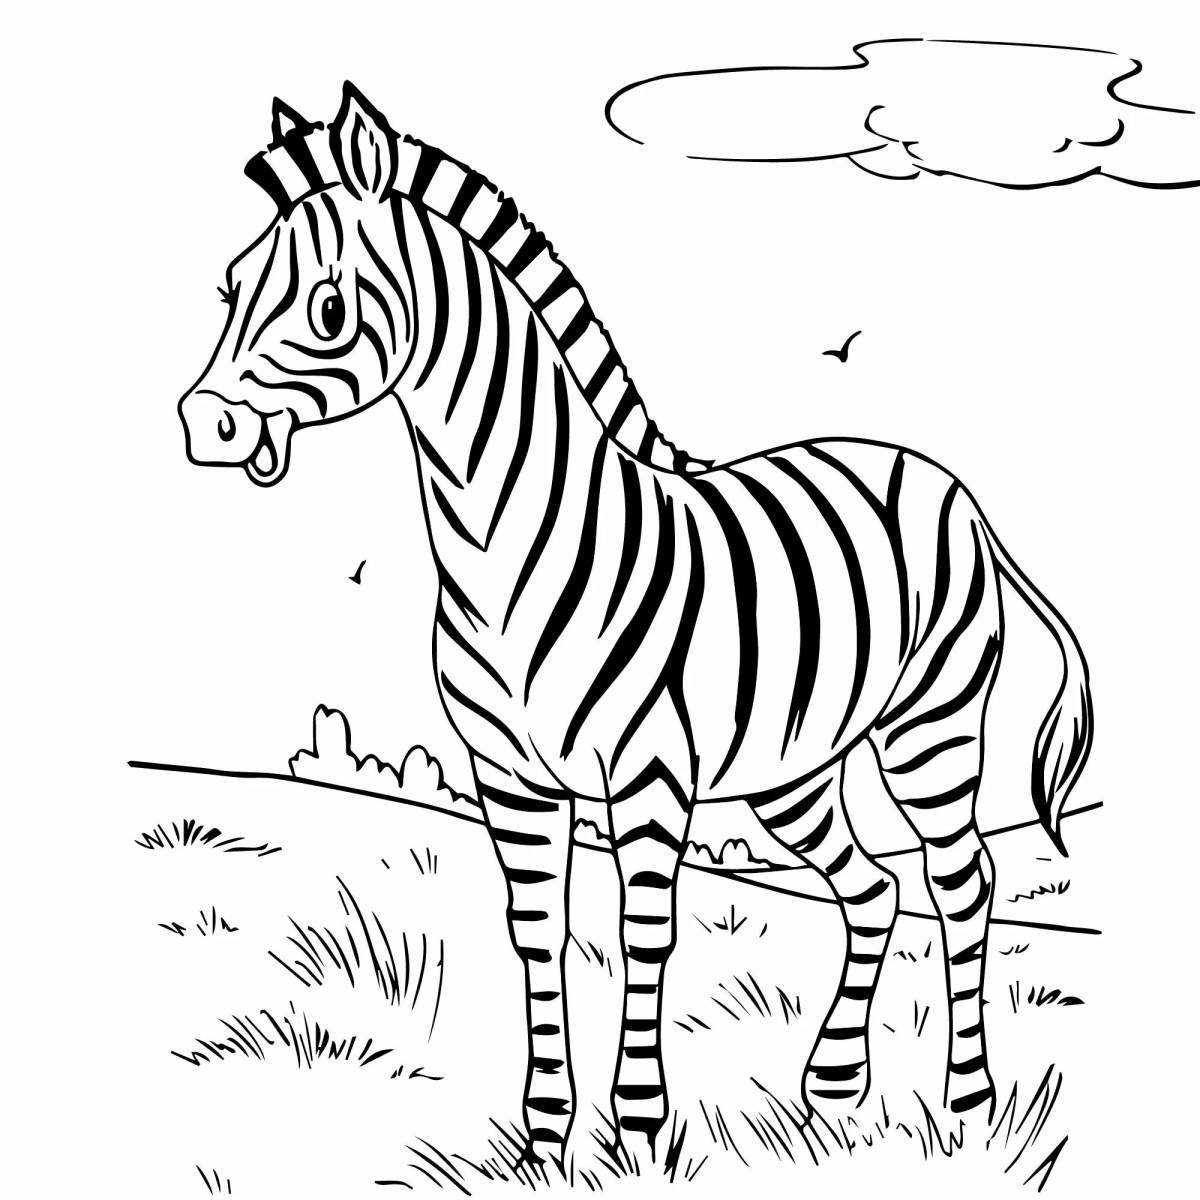 Fun zebra pattern for kids